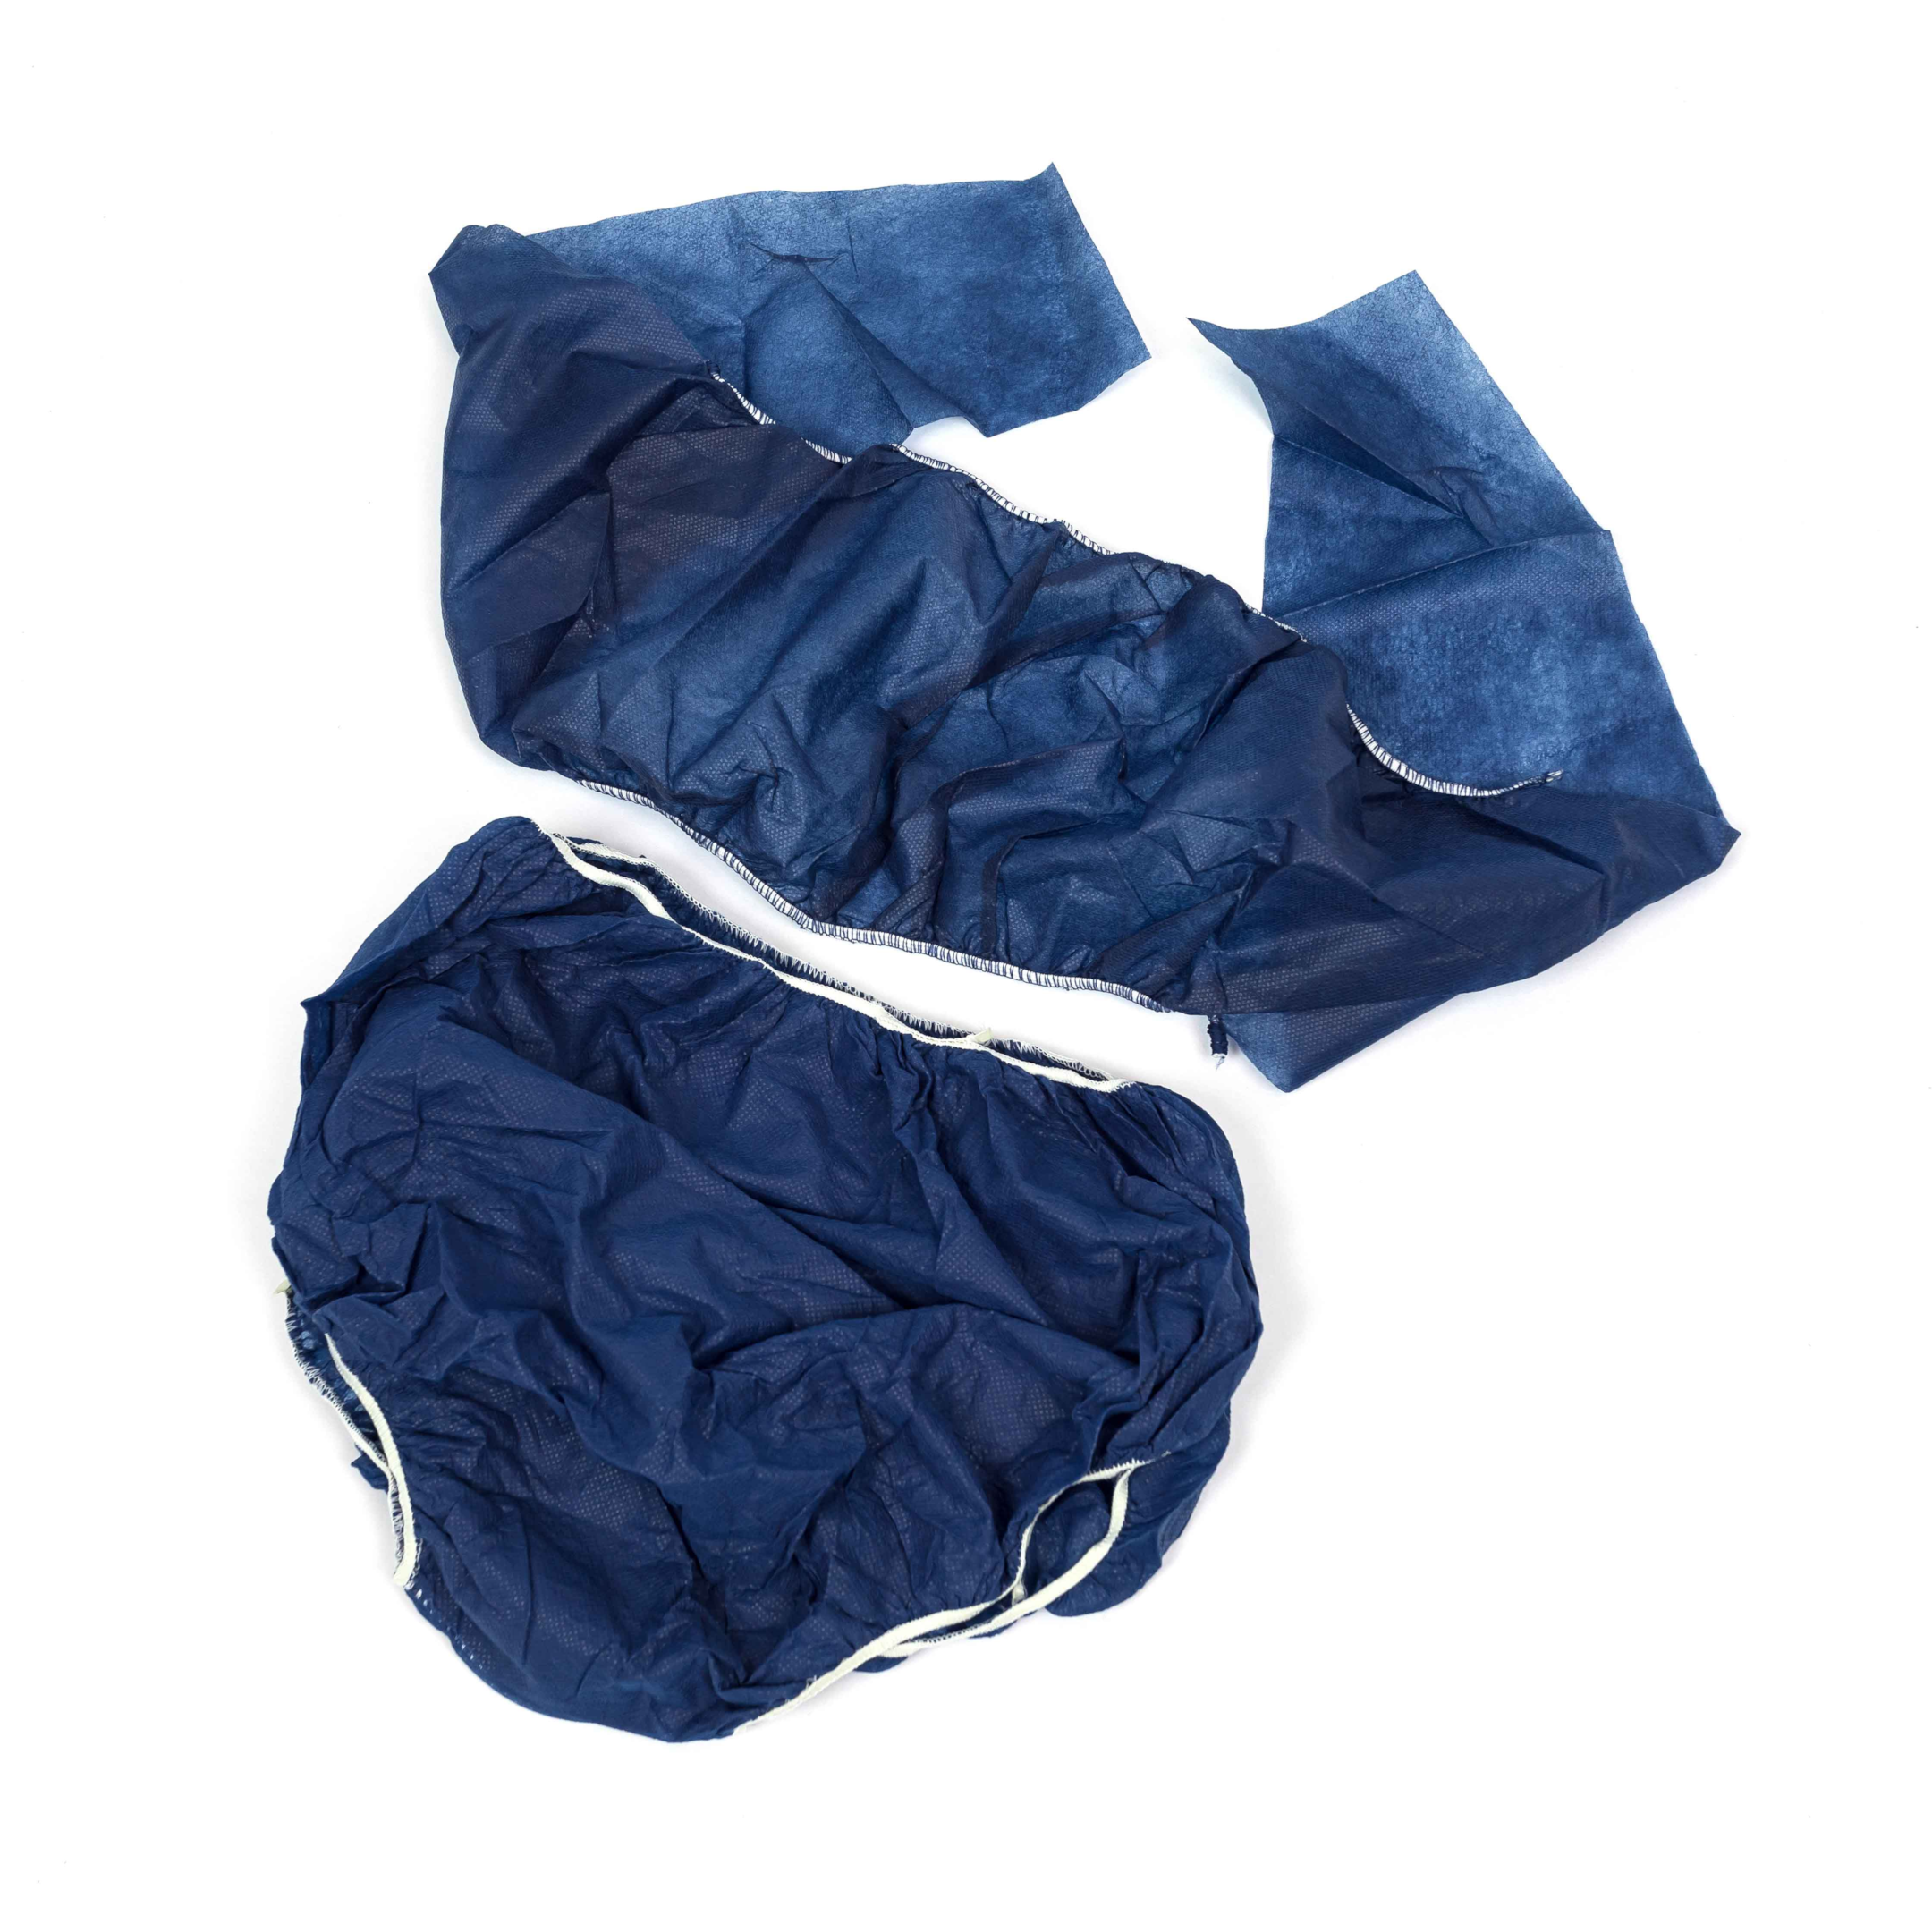 Paper Non Woven Disposable Underwear Women - China Disposable Underwear  Women and Disposable Underwear Travel price